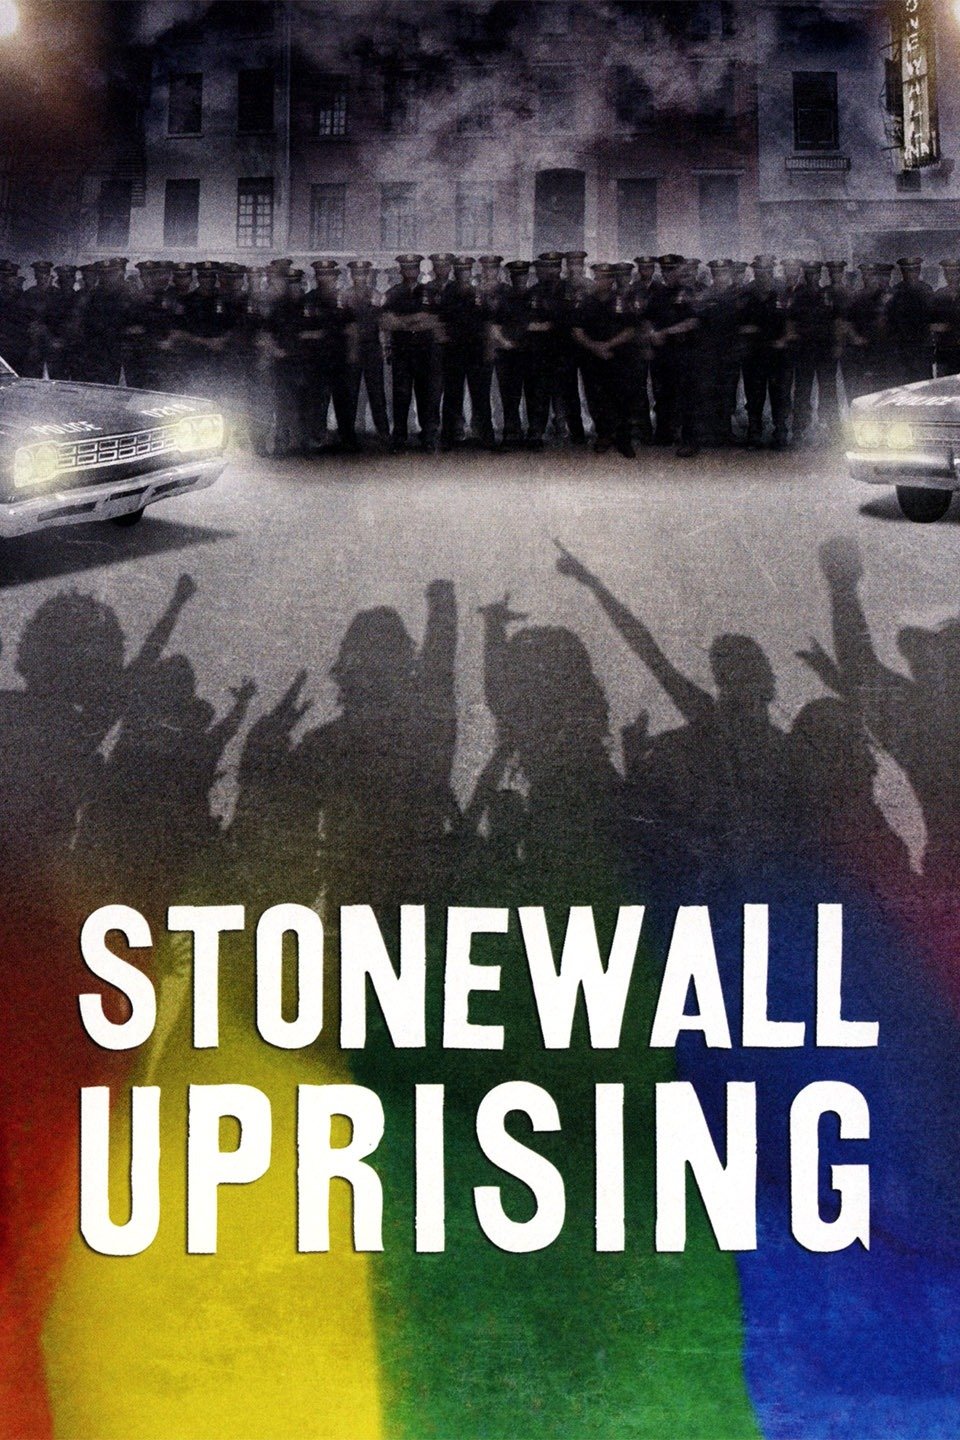 Stonewall Uprising (documentary)